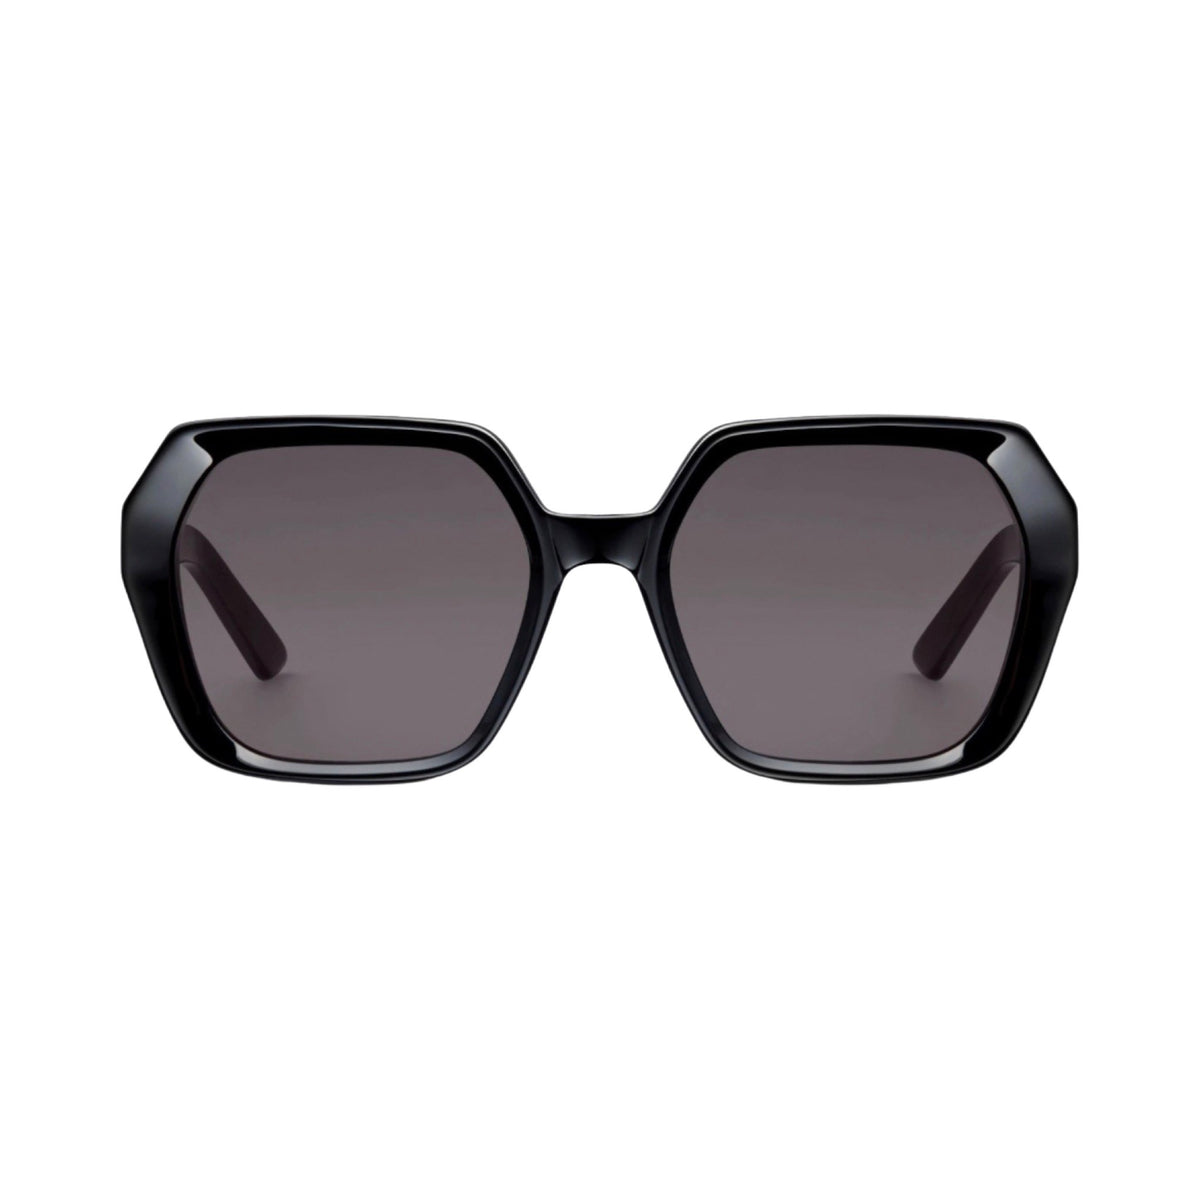 Christian Dior Sunglasses Midnight